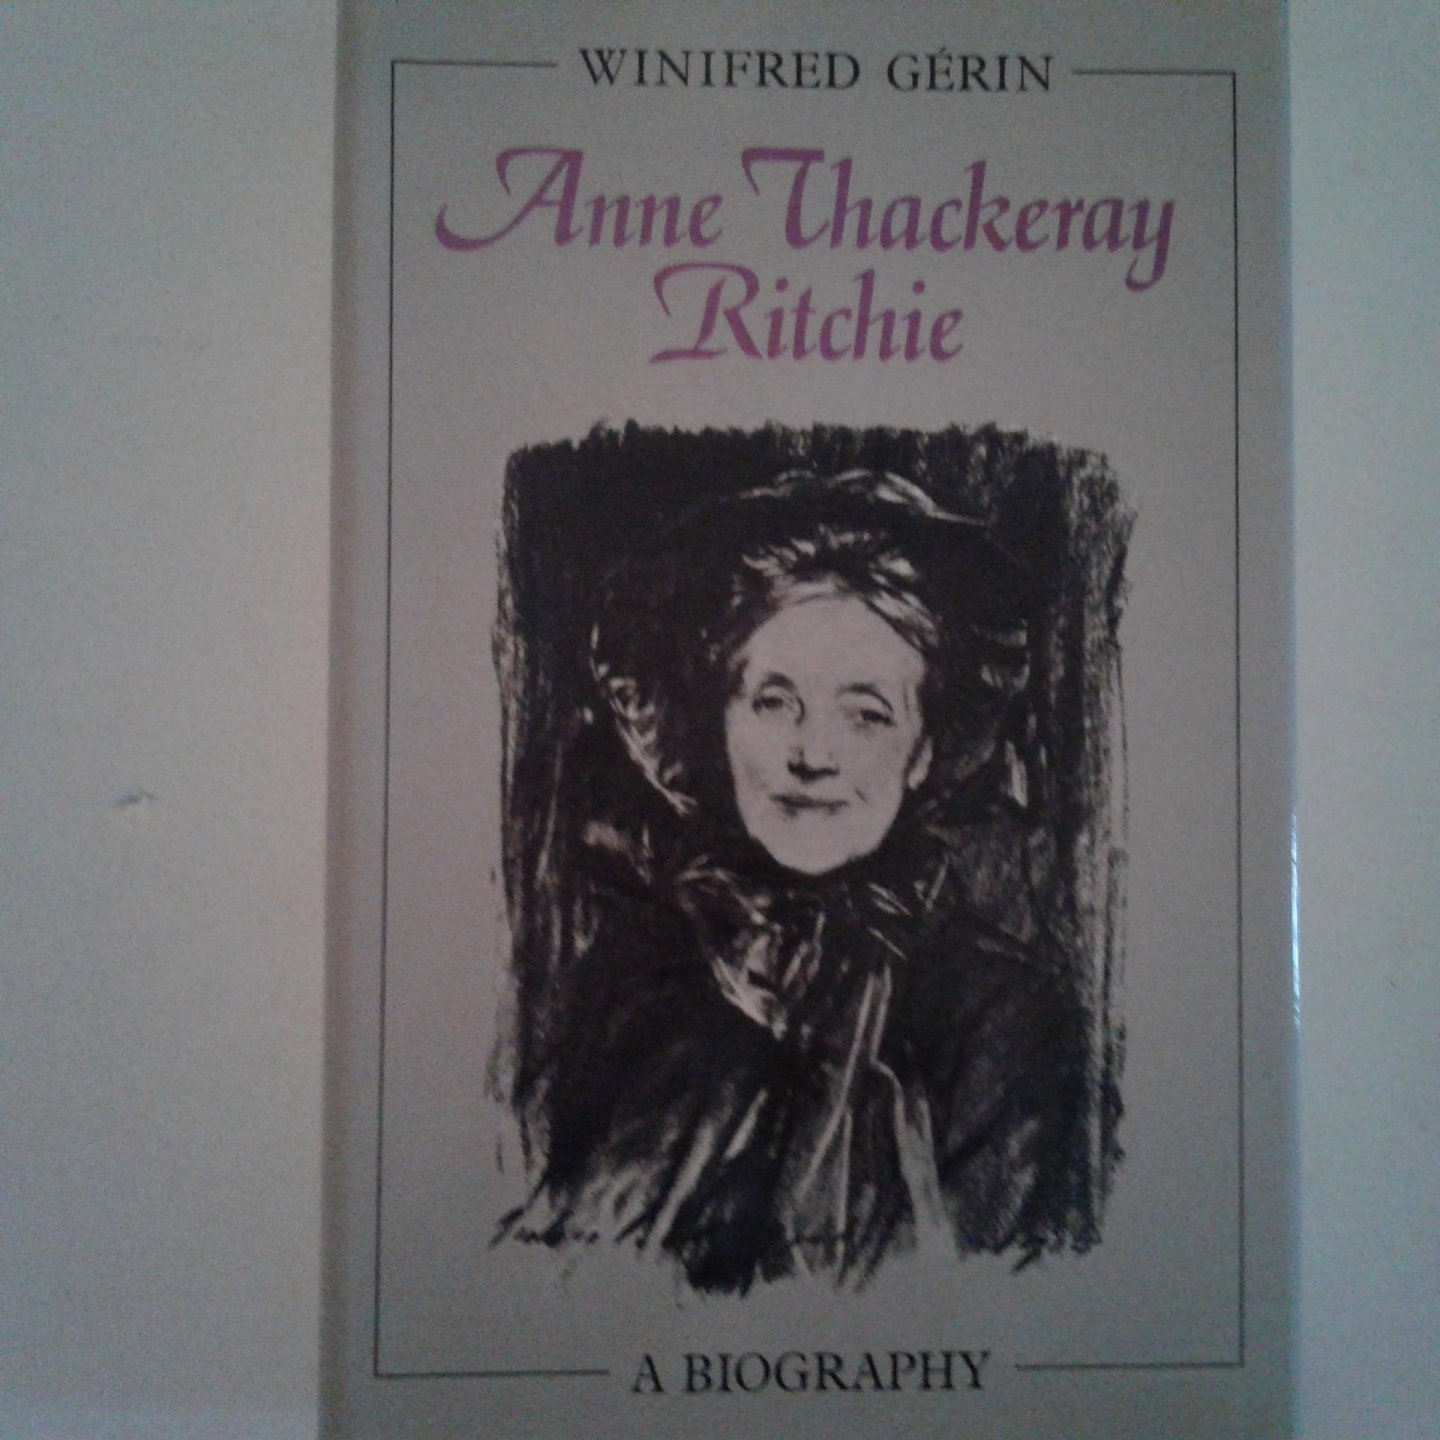 Gérin, Winifred - Anne Thackeray Ritchie